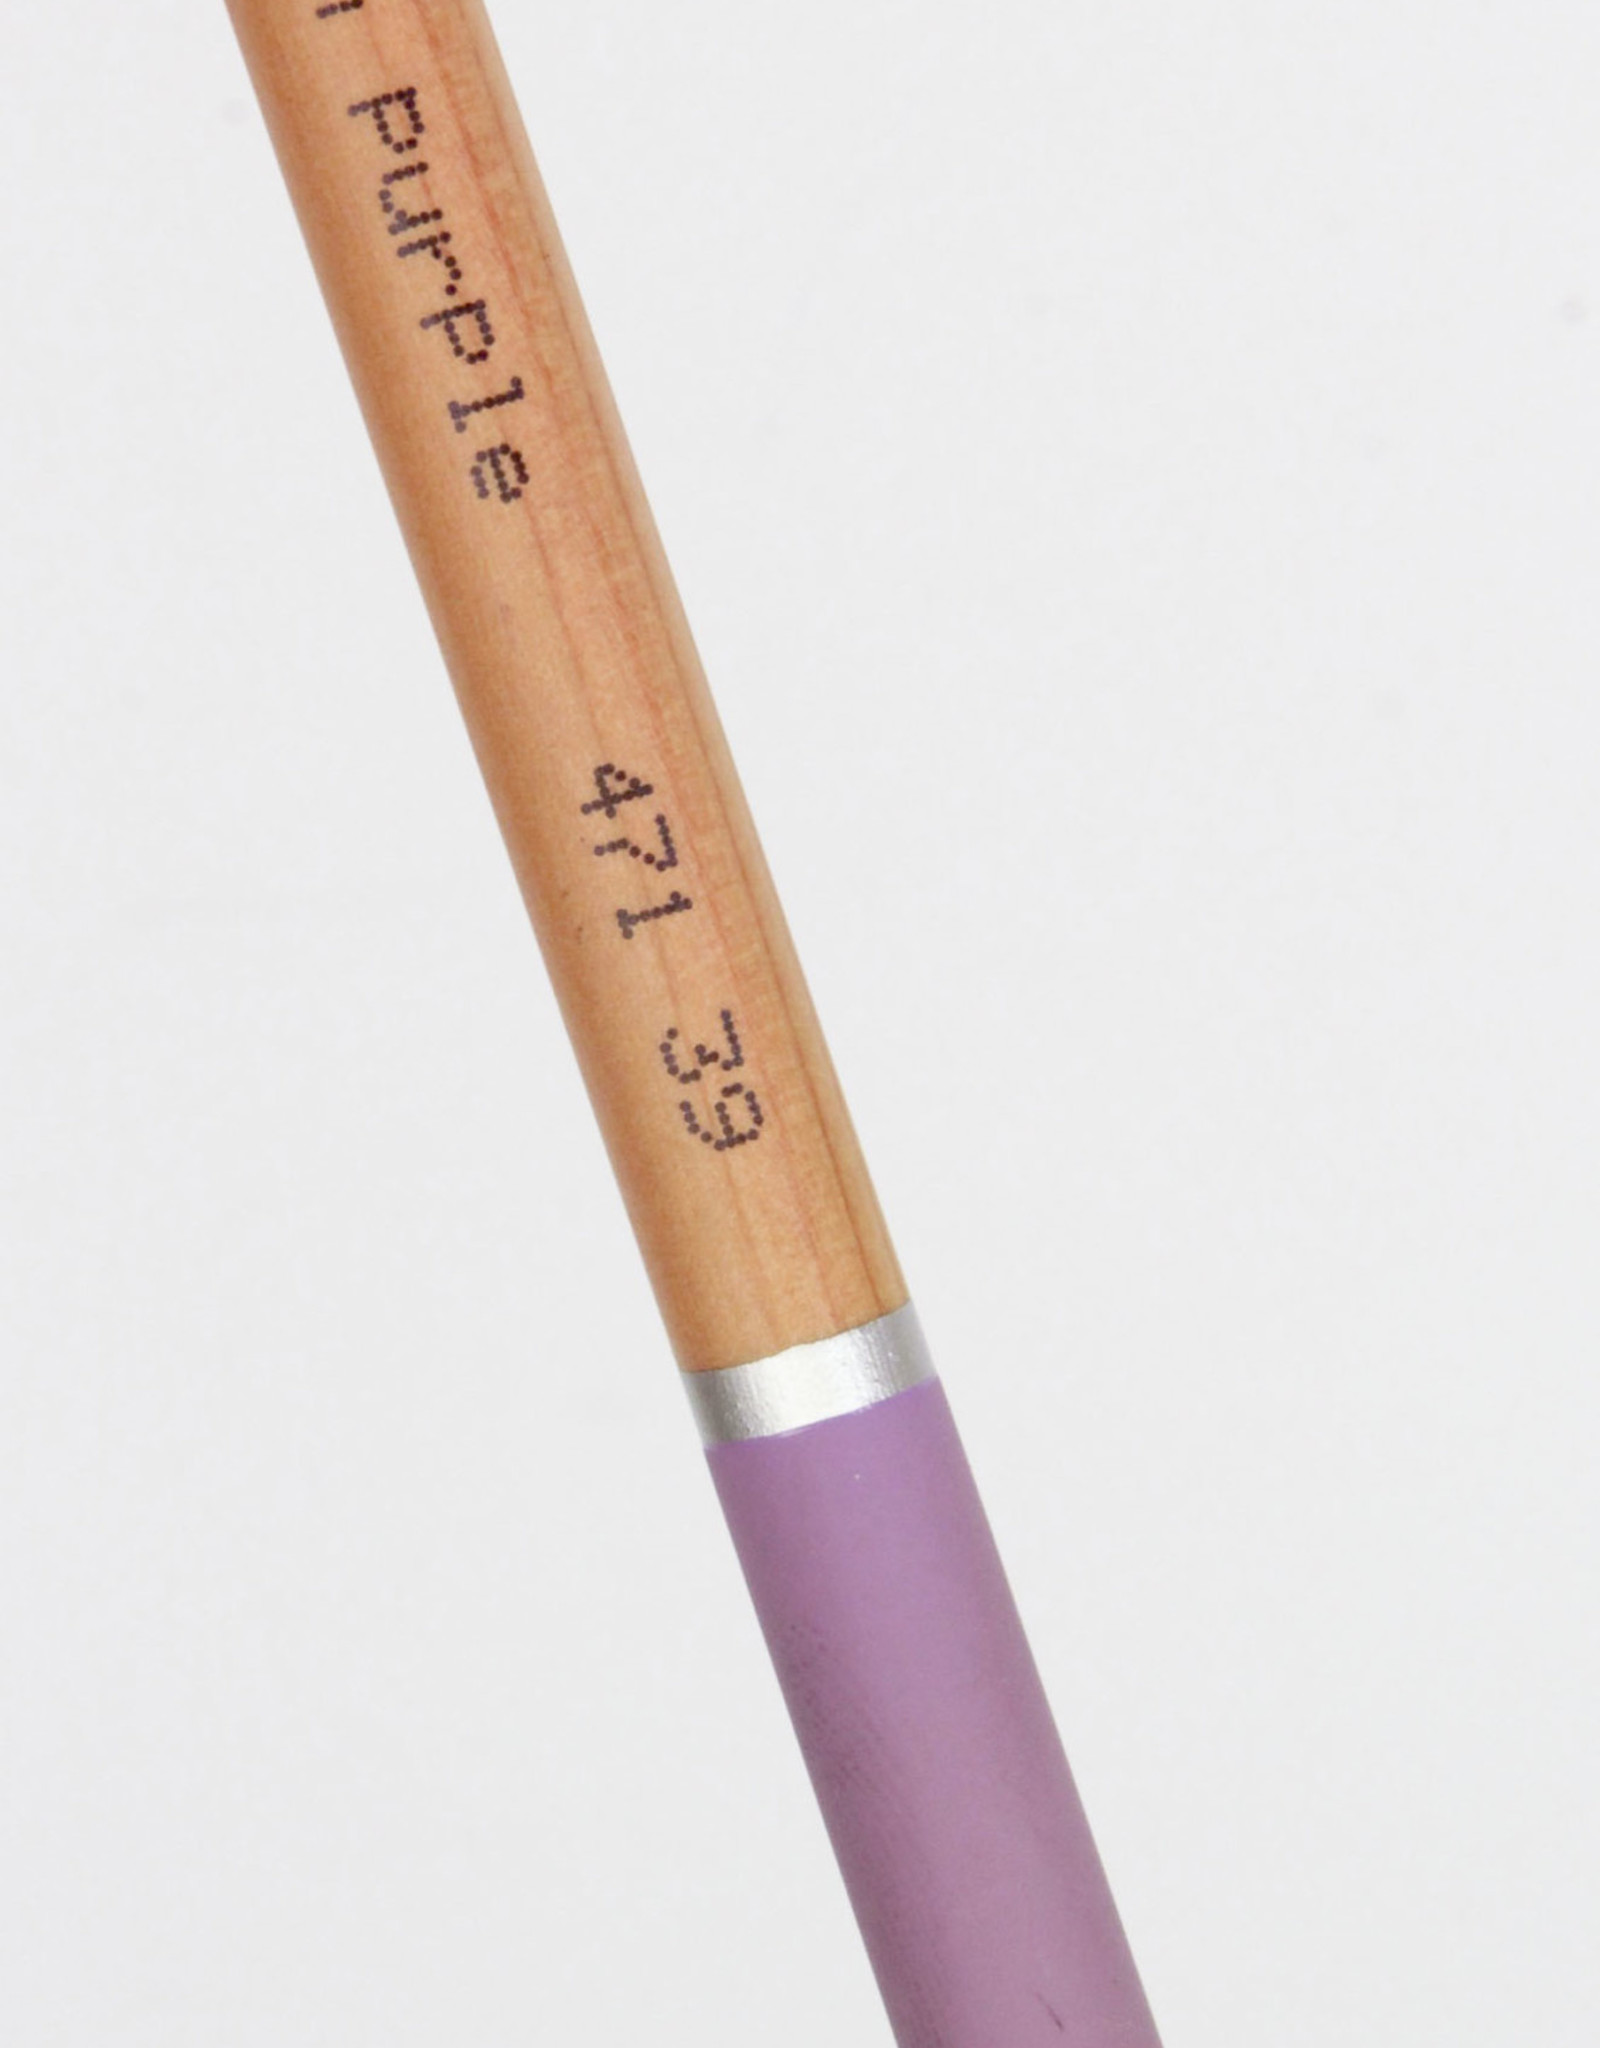 Cretacolor, Fine Art Pastel Pencil, Bluish Purple